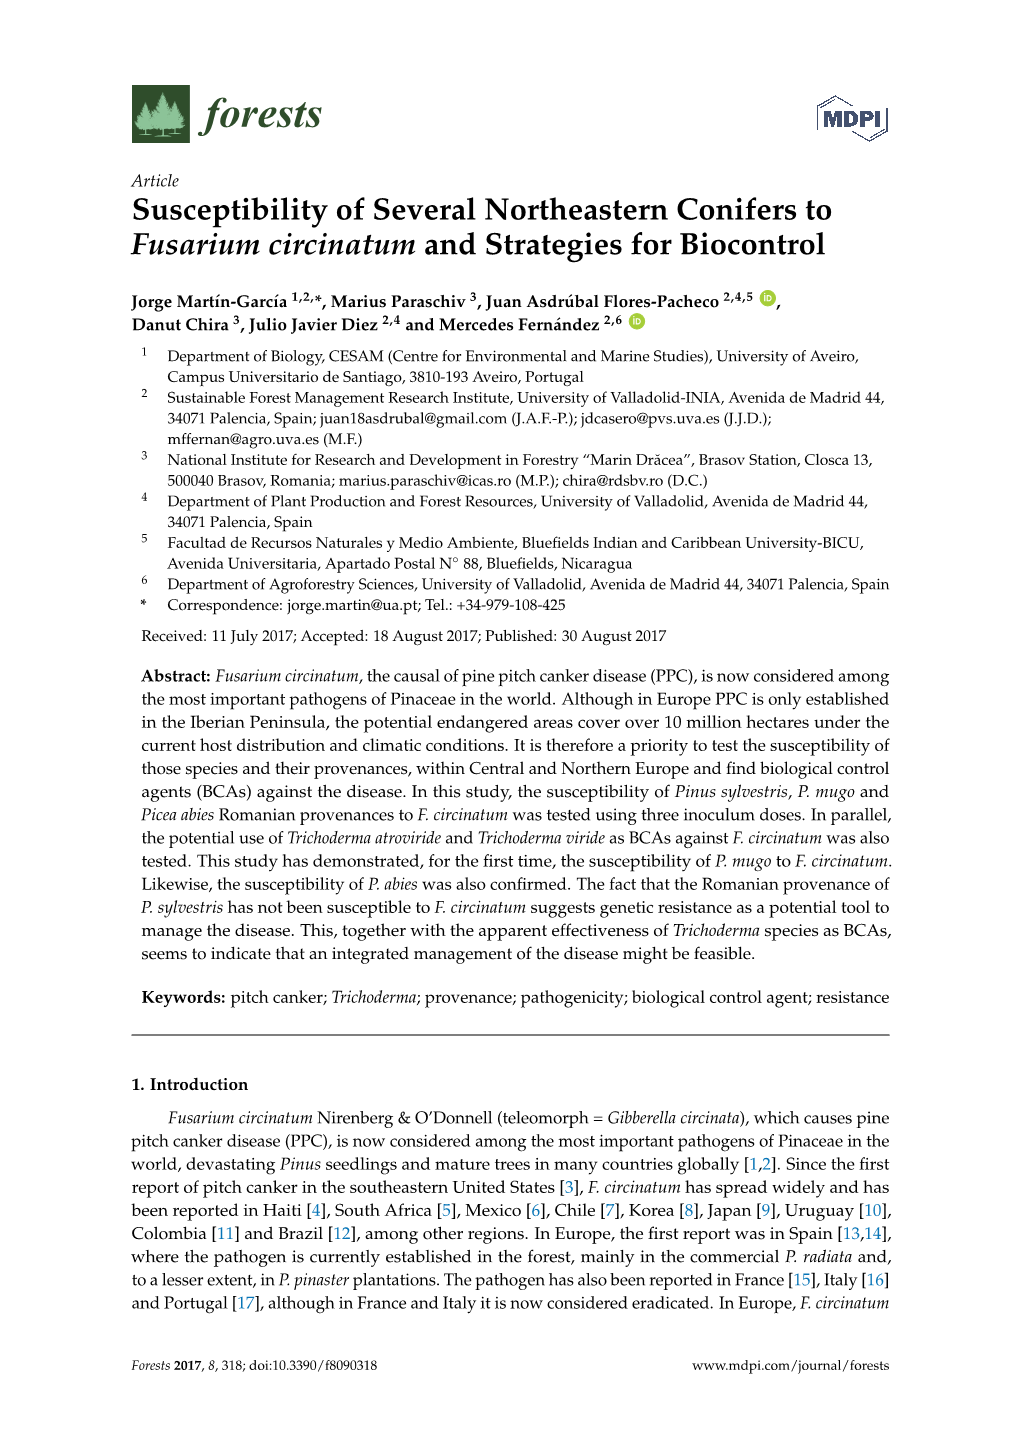 Susceptibility of Several Northeastern Conifers to Fusarium Circinatum and Strategies for Biocontrol